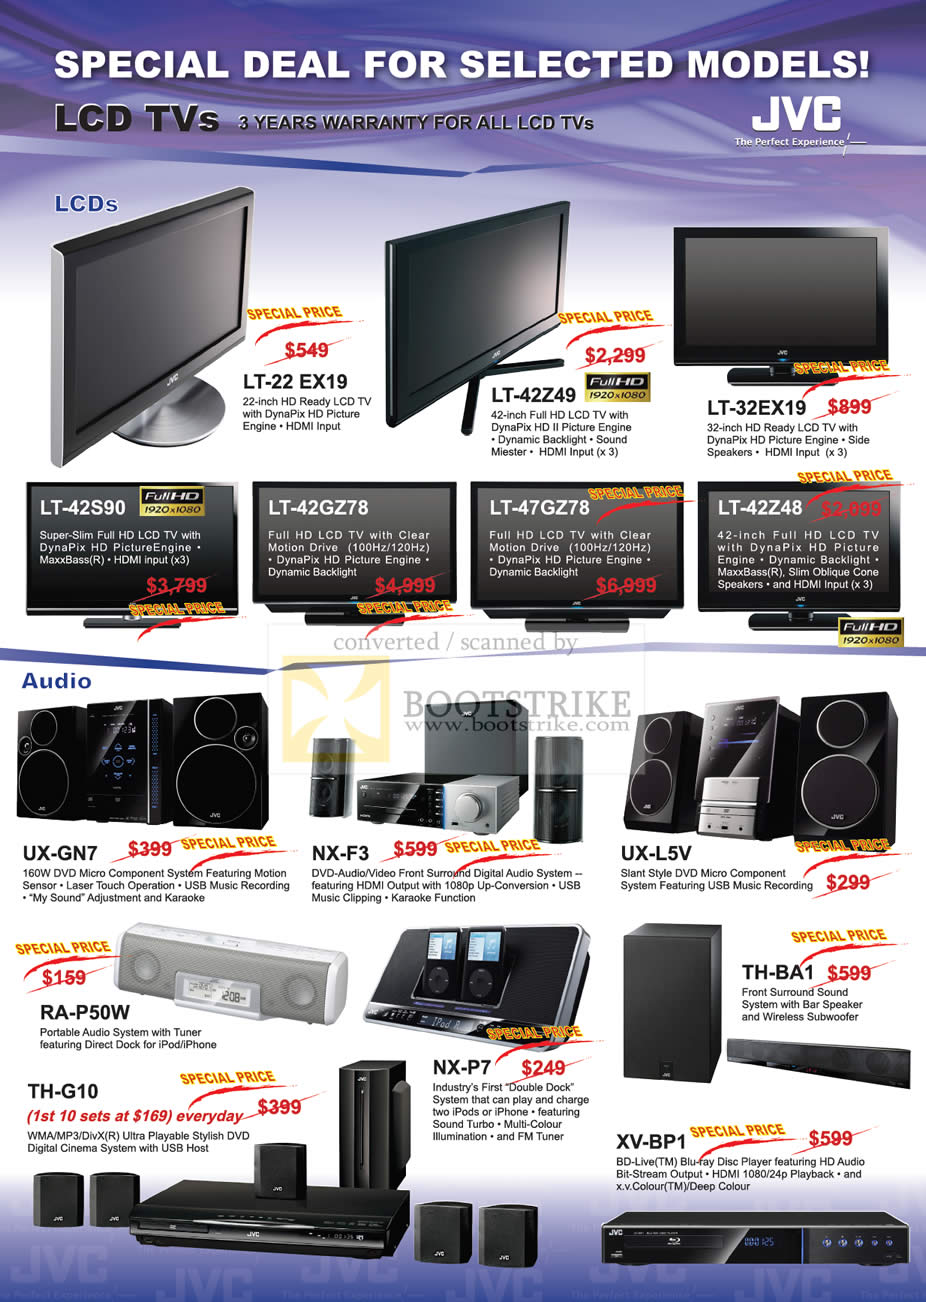 Sitex 2009 price list image brochure of JVC LCD TV Audio DVD Micro Component System Blu Ray Digital Cinema Speakers